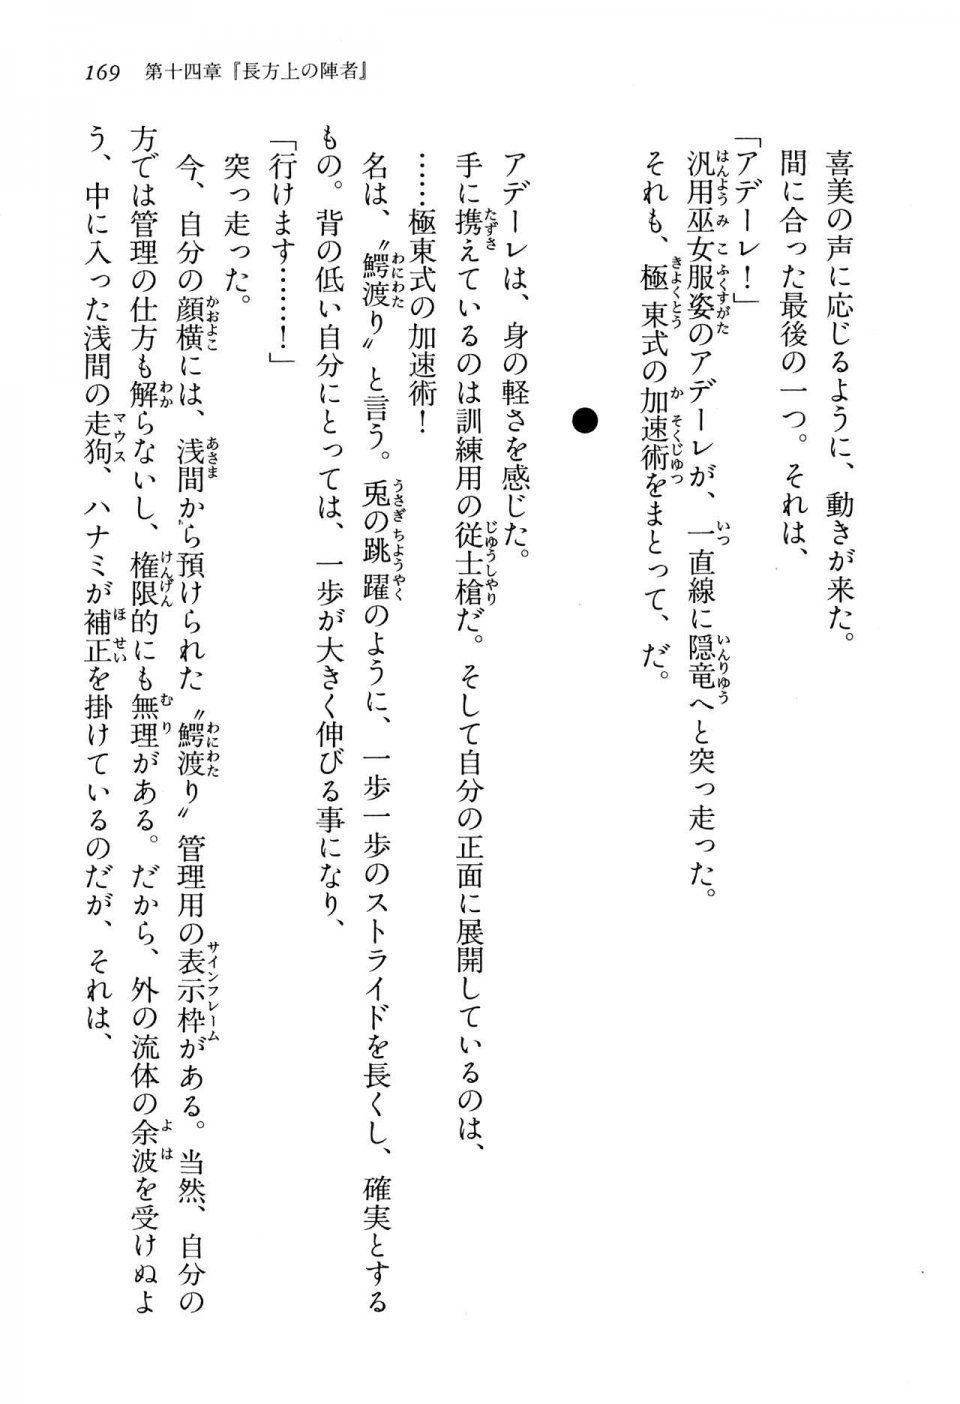 Kyoukai Senjou no Horizon BD Special Mininovel Vol 3(2A) - Photo #173